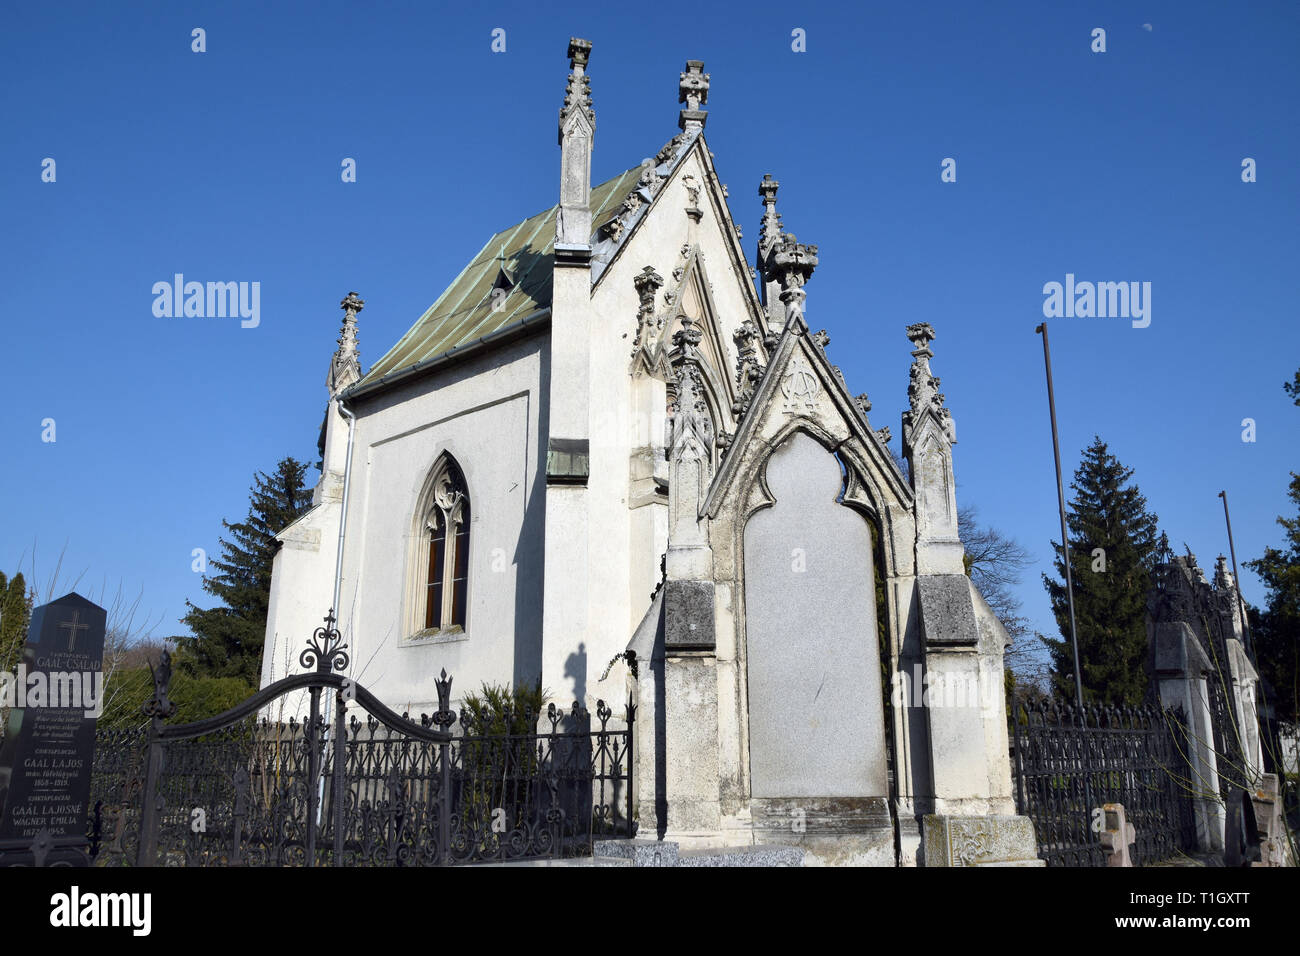 Luczenbacher Cemetery Chapel, Szob, Hungary. Luczenbacher temetokapolna, Szob, Magyarorszag. Stock Photo